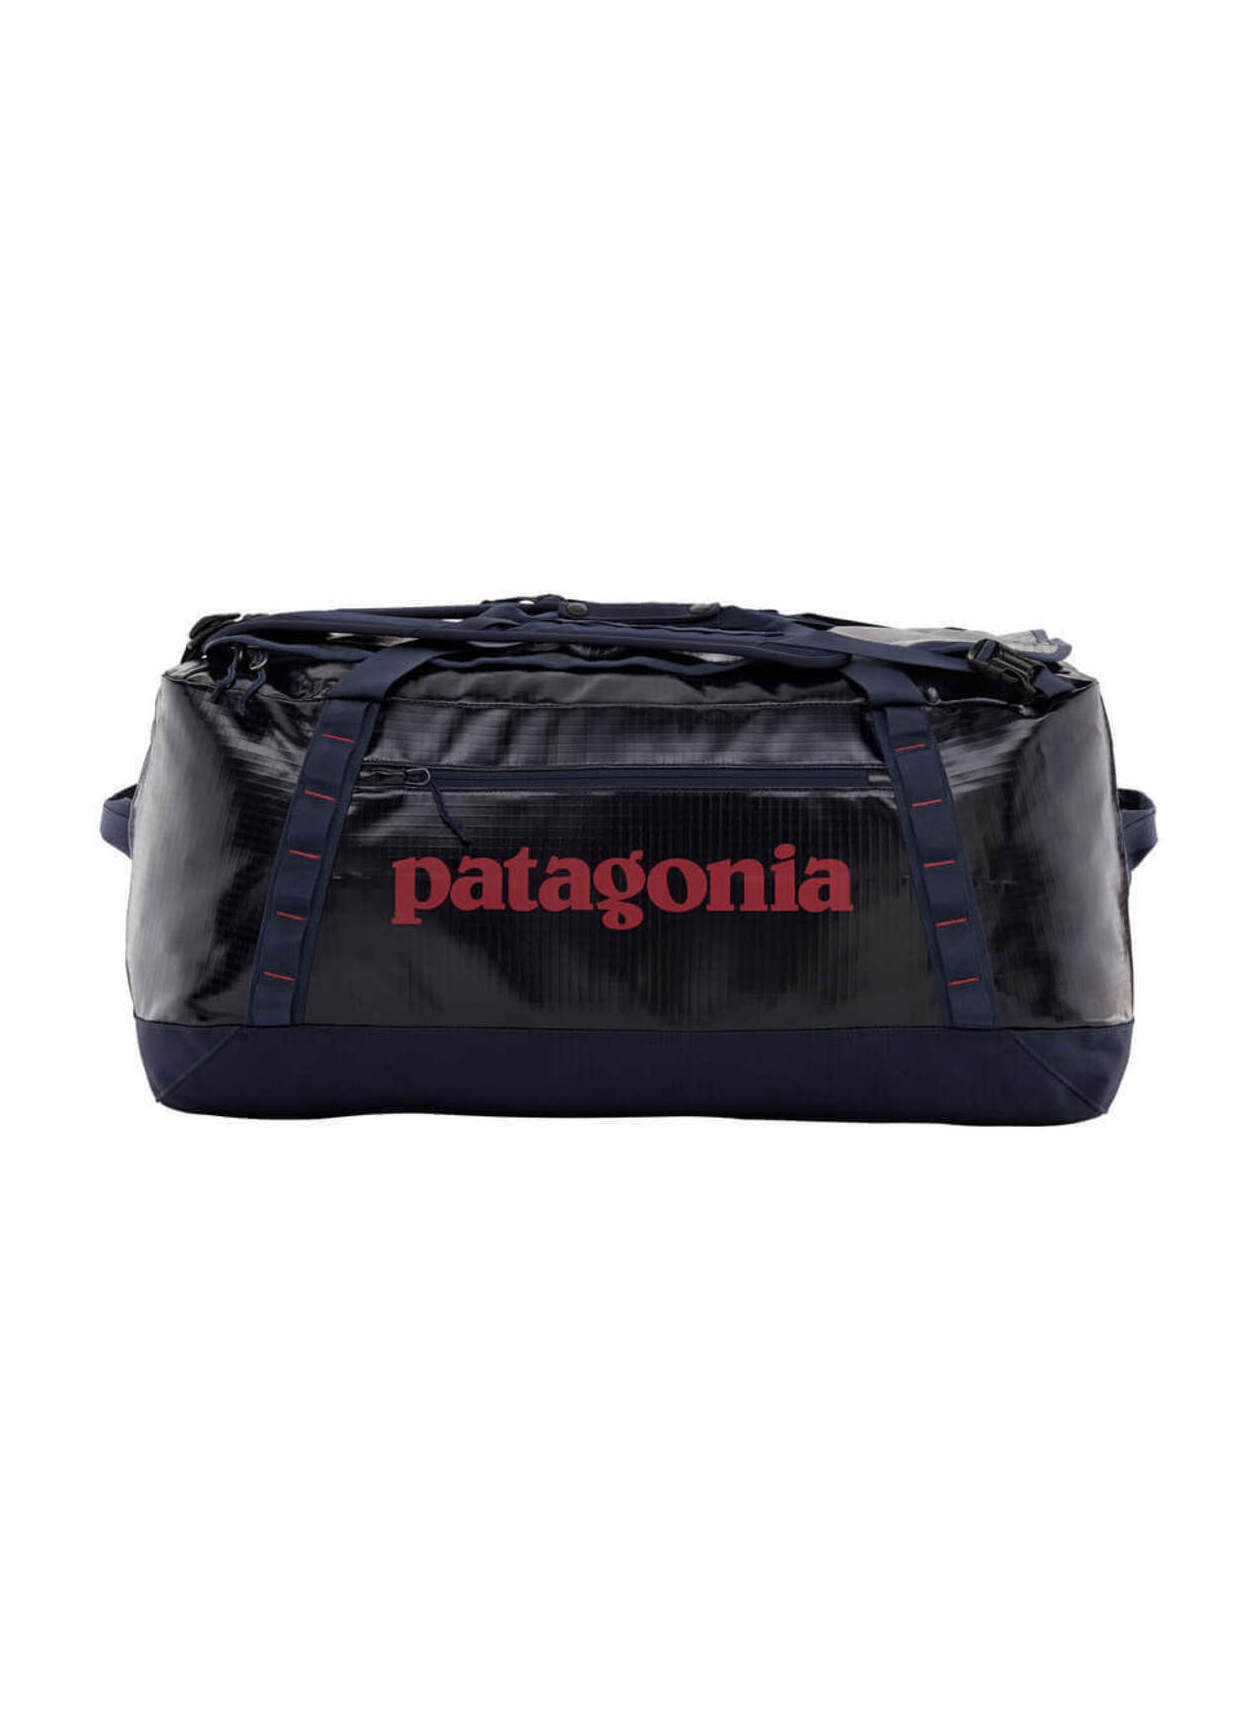 Patagonia Black Black Hole Duffel Bag 70L